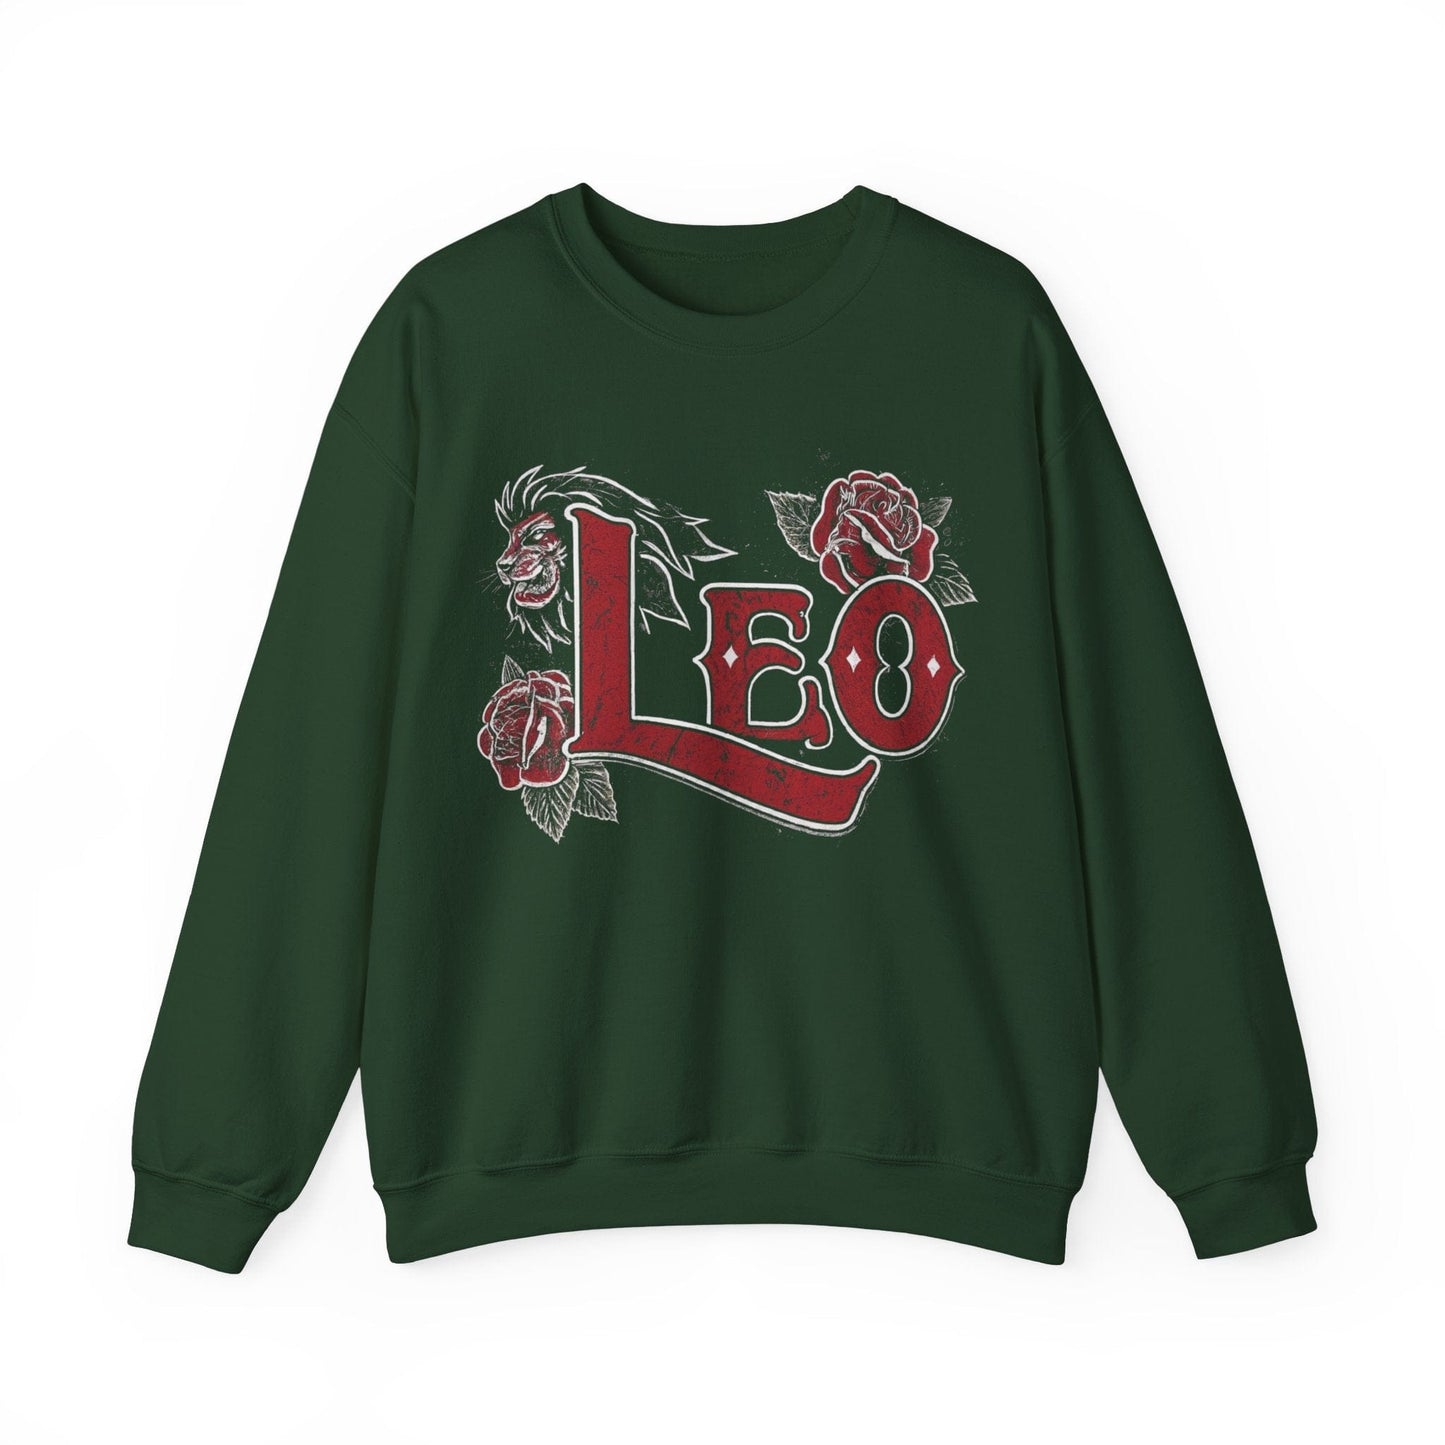 Sweatshirt S / Forest Green Classic Rockabilly Leo Soft Sweater